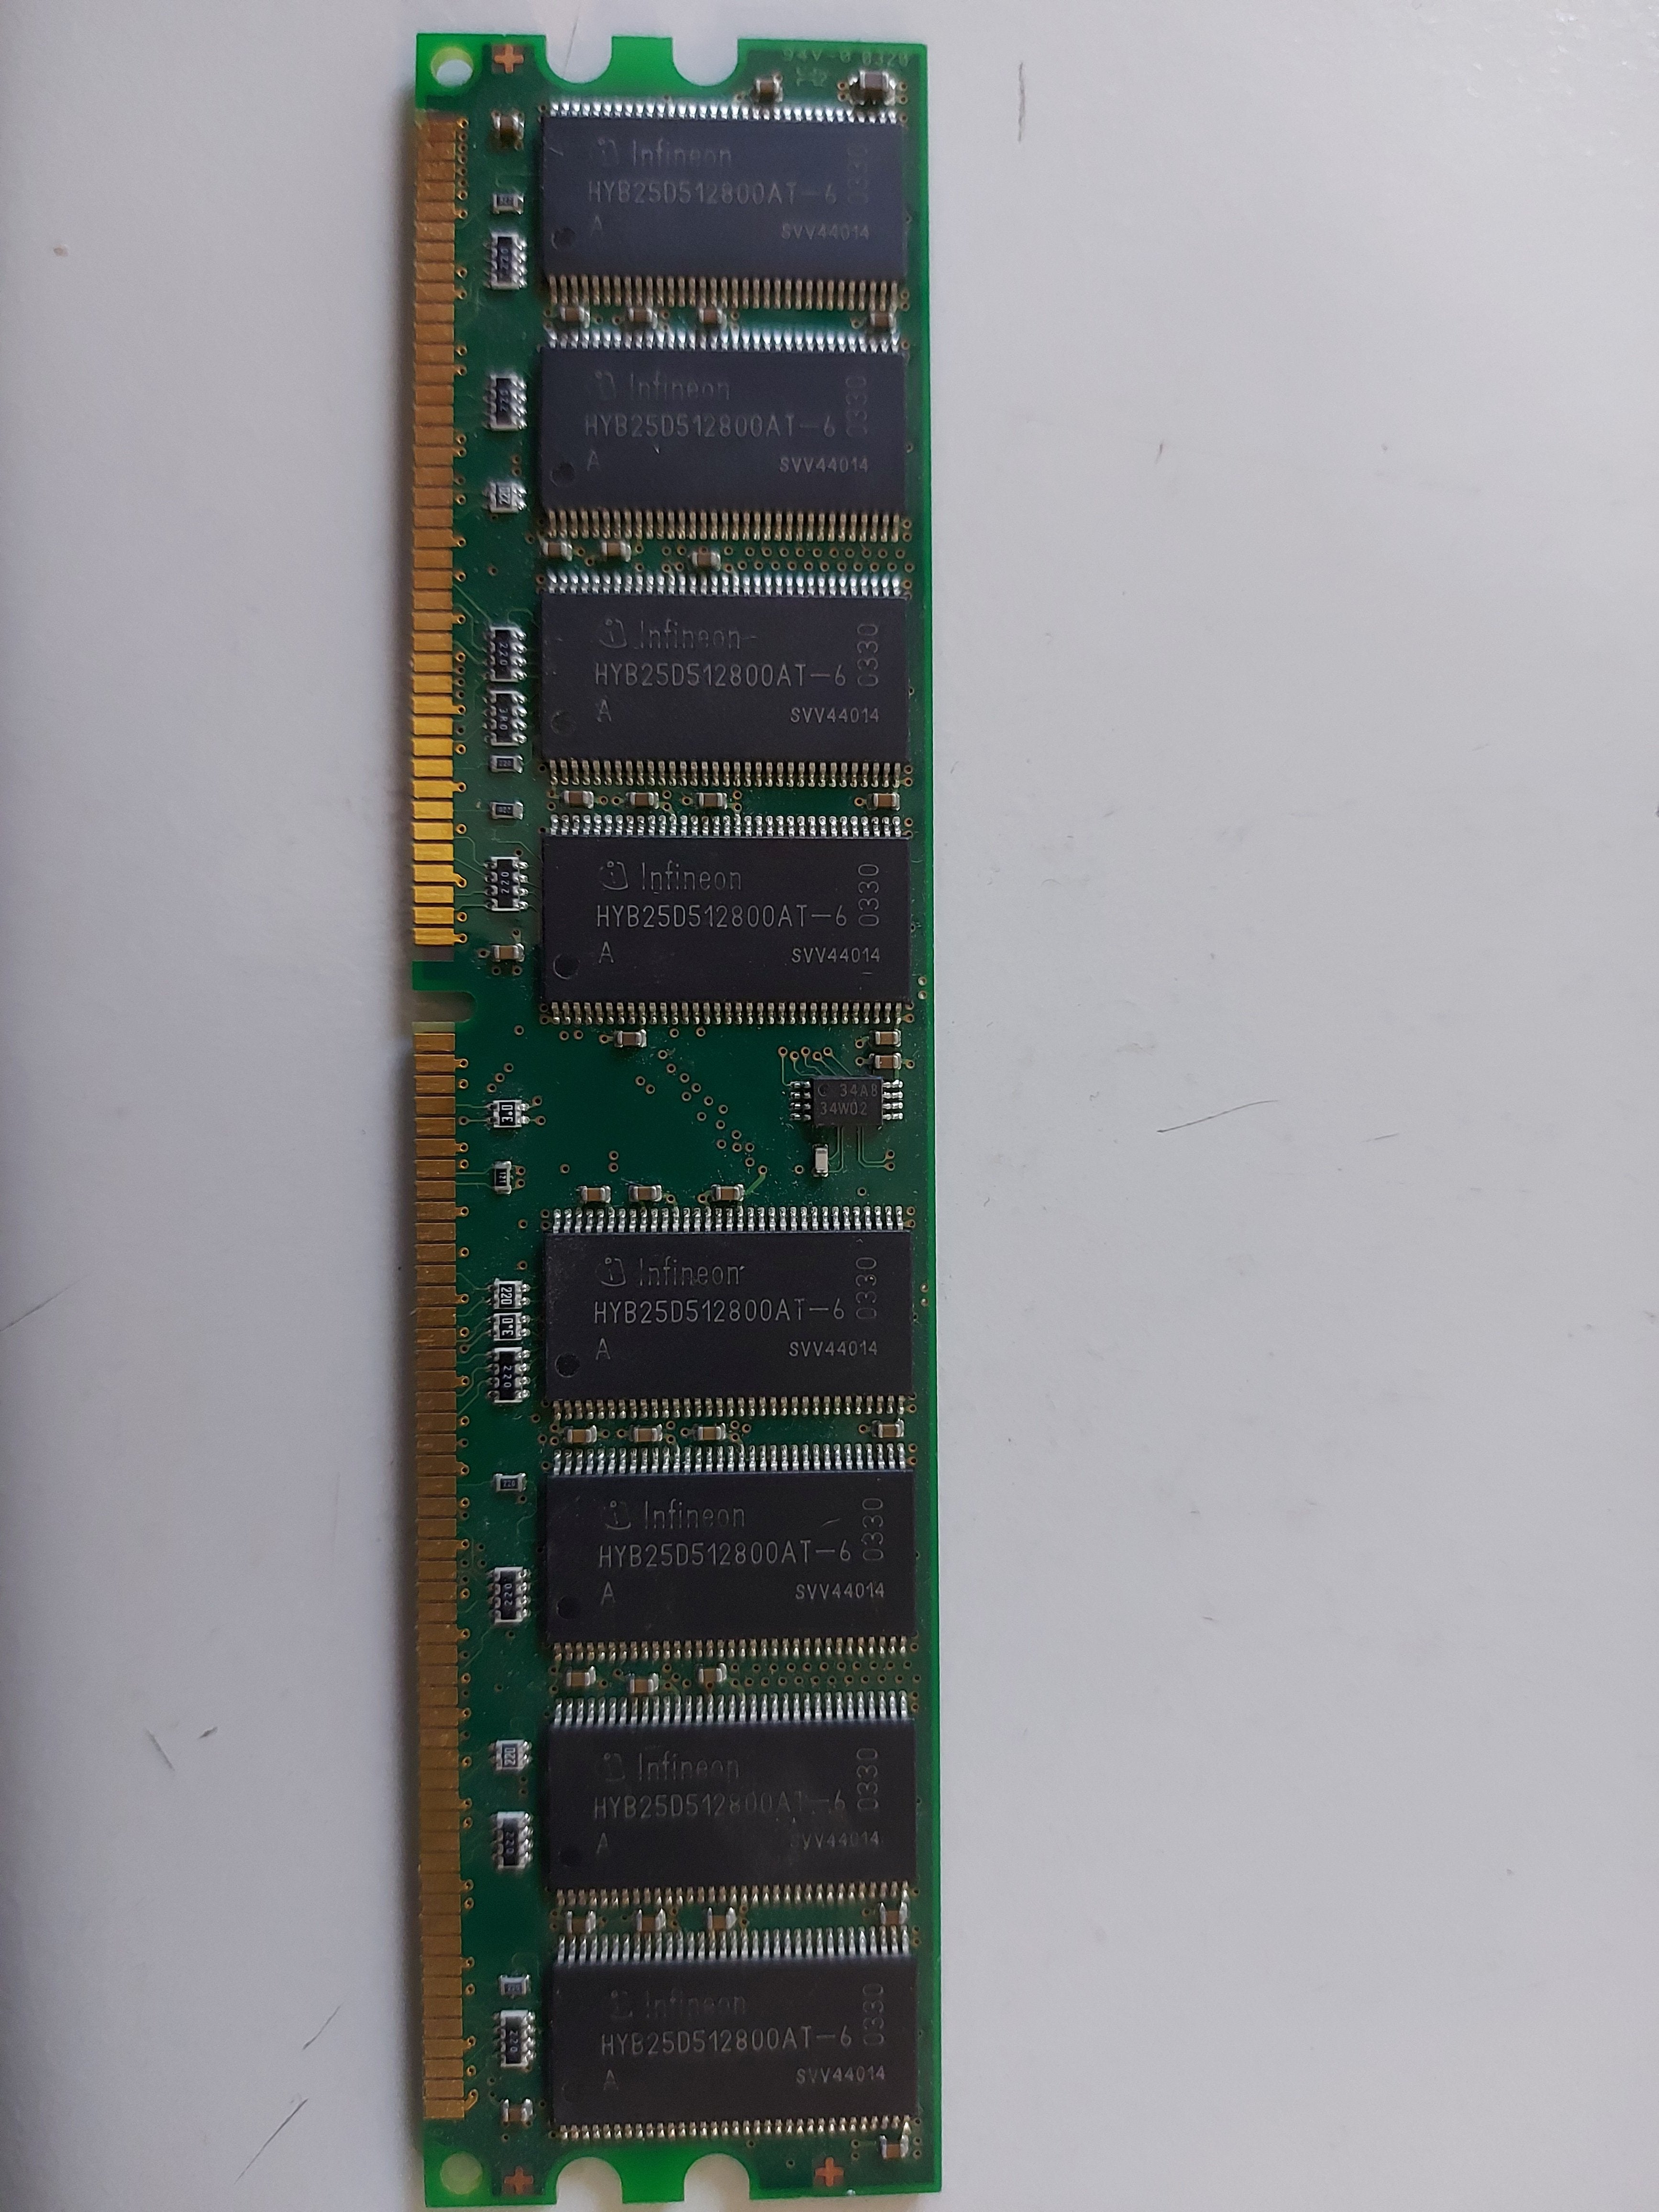 Infineon HP 1GB PC2700 333MHz CL2.5 DDR DIMM ( HYS64D128320GU-6-A 305959-051 ) REF